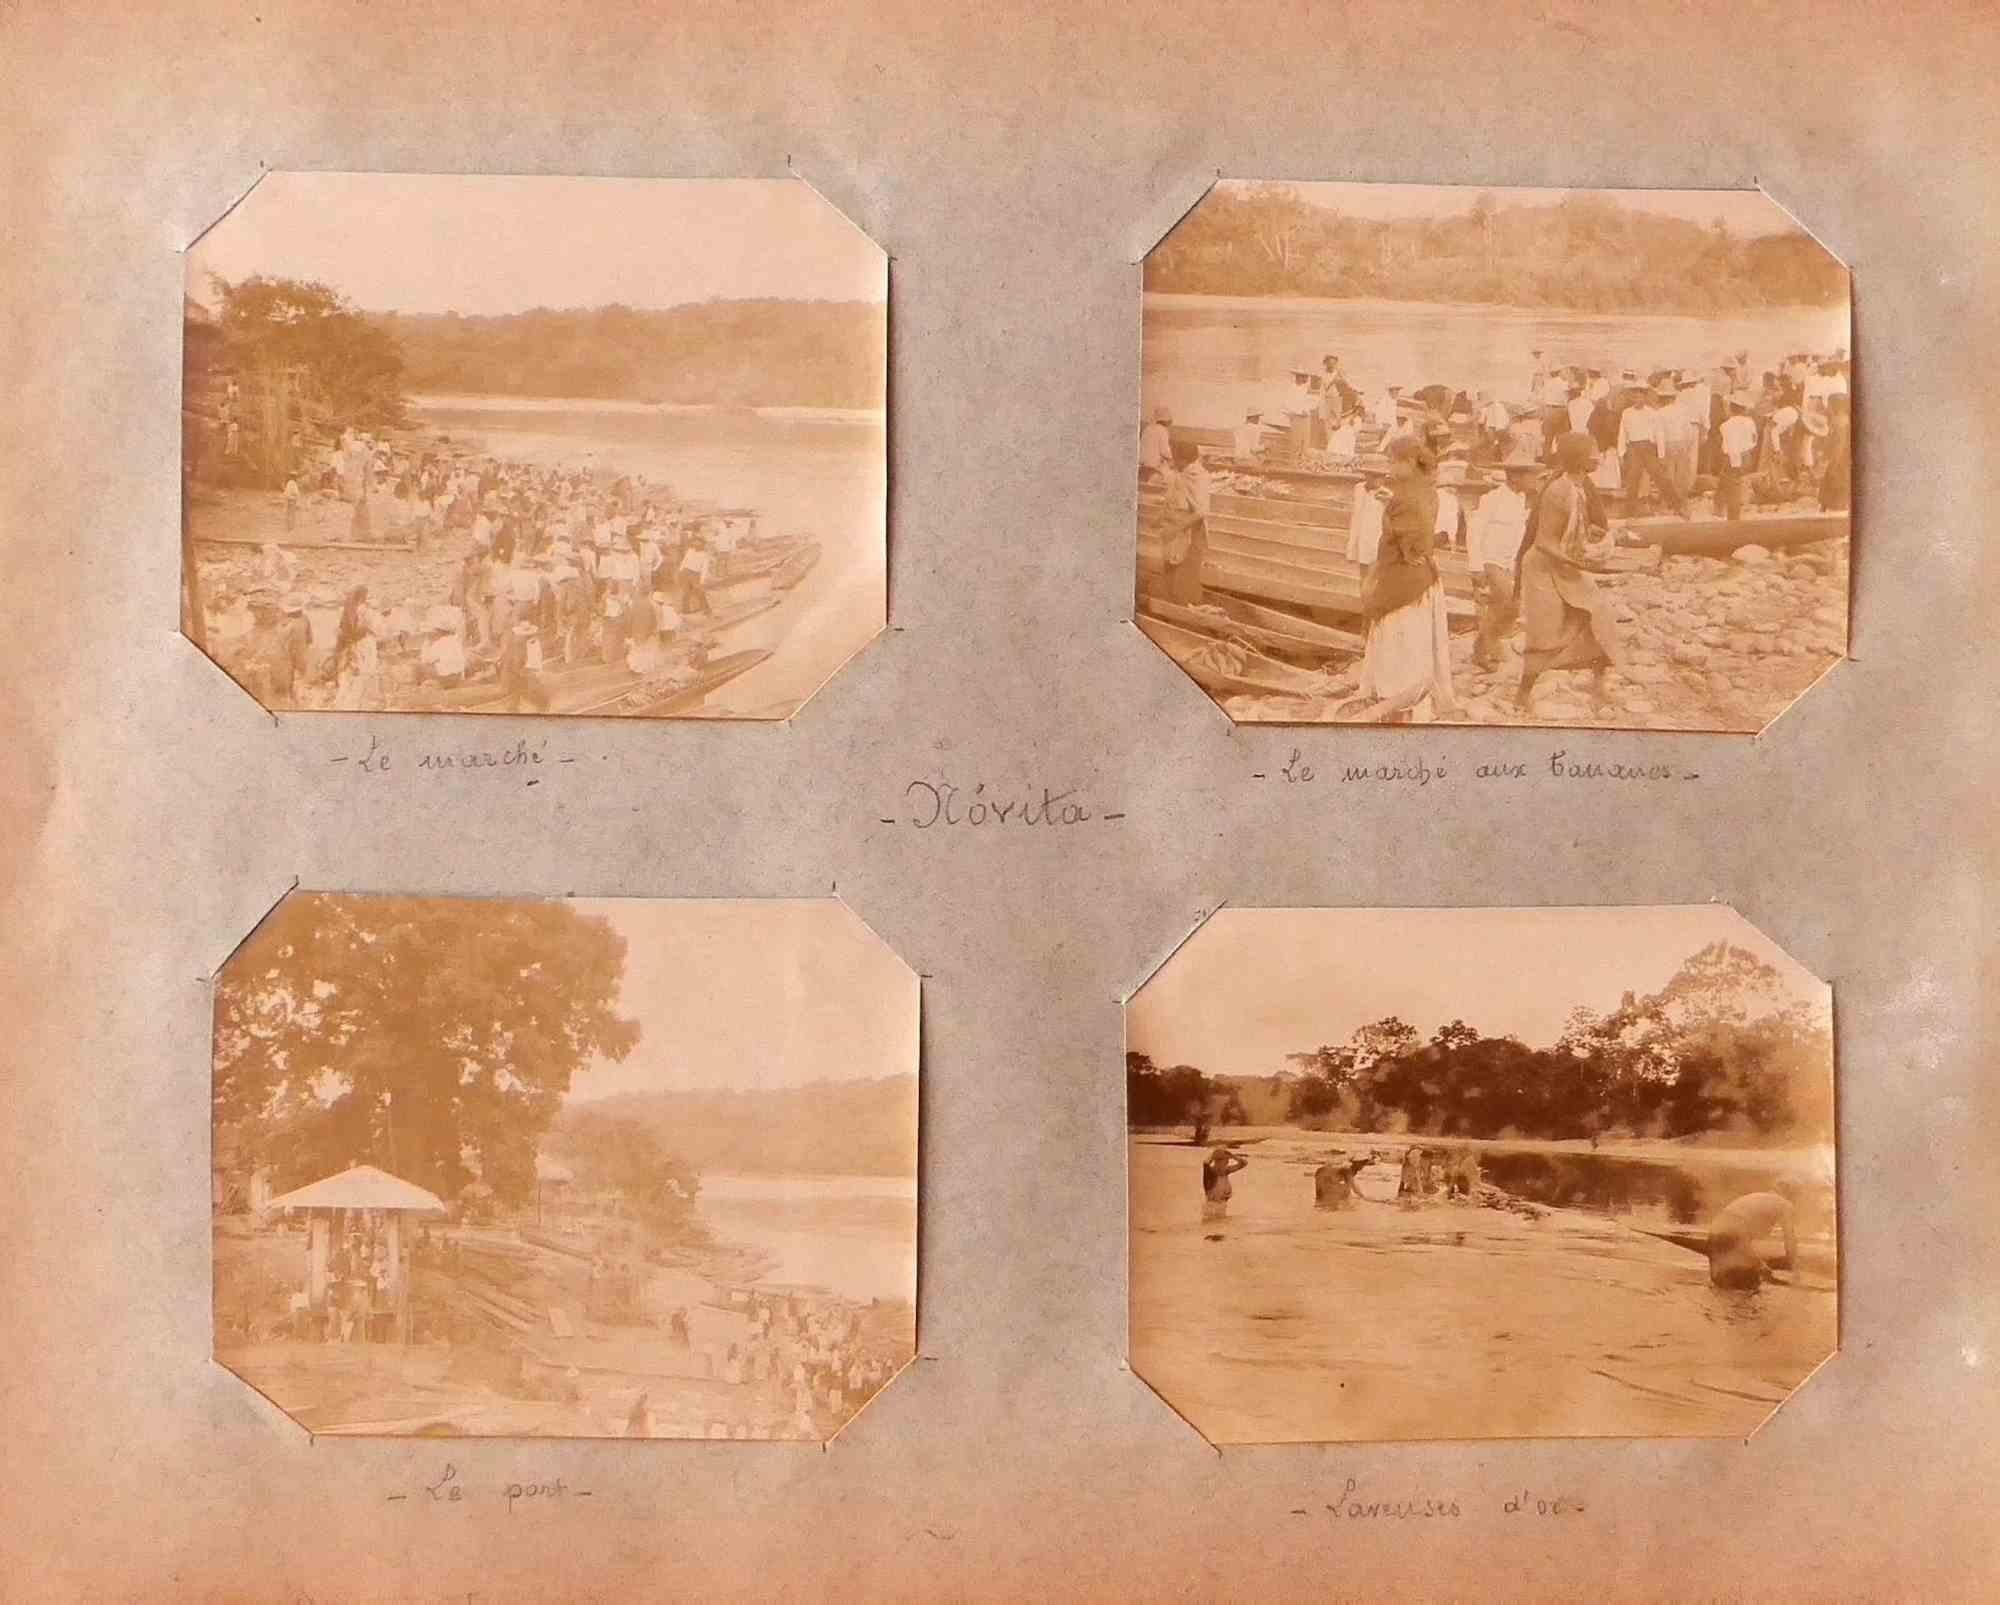 19th century landscape photography